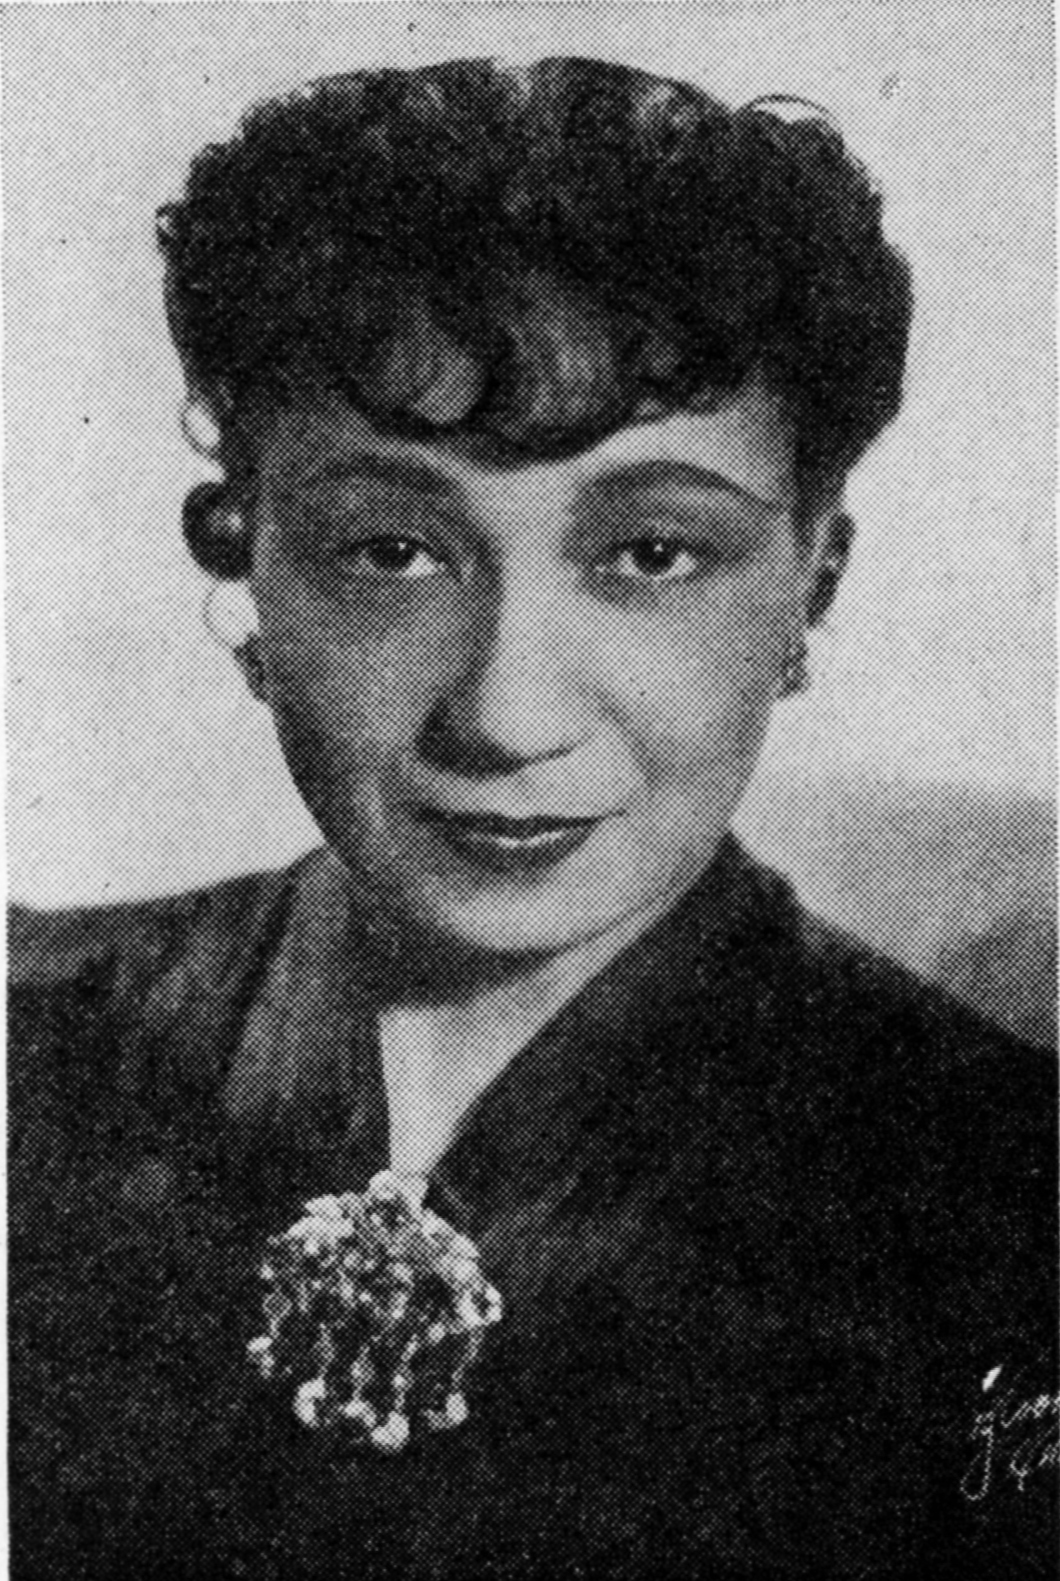 Headshot of Etta Moten with a large brooch